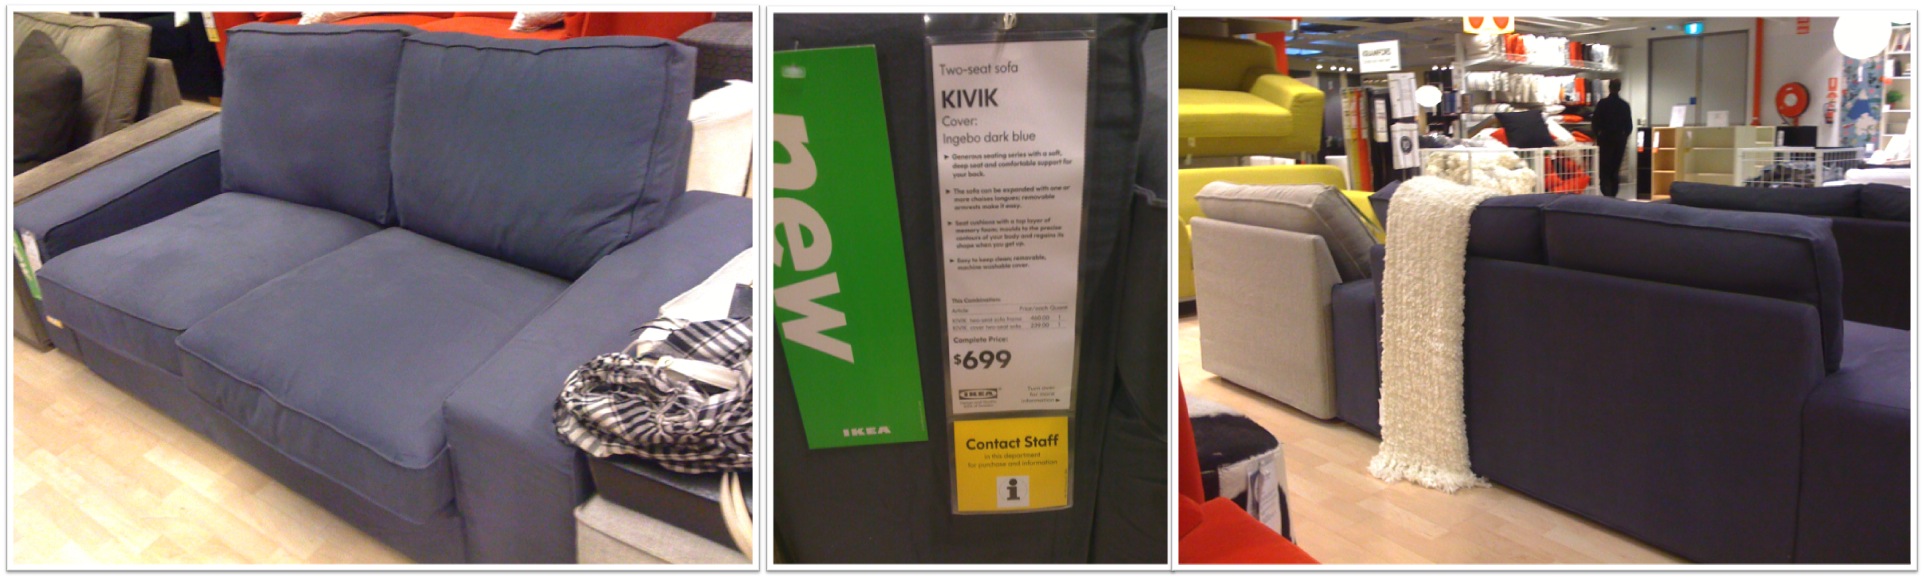 IKEA KIVIK(シーヴィク)ソファレビュー | Comfort Works ブログ 